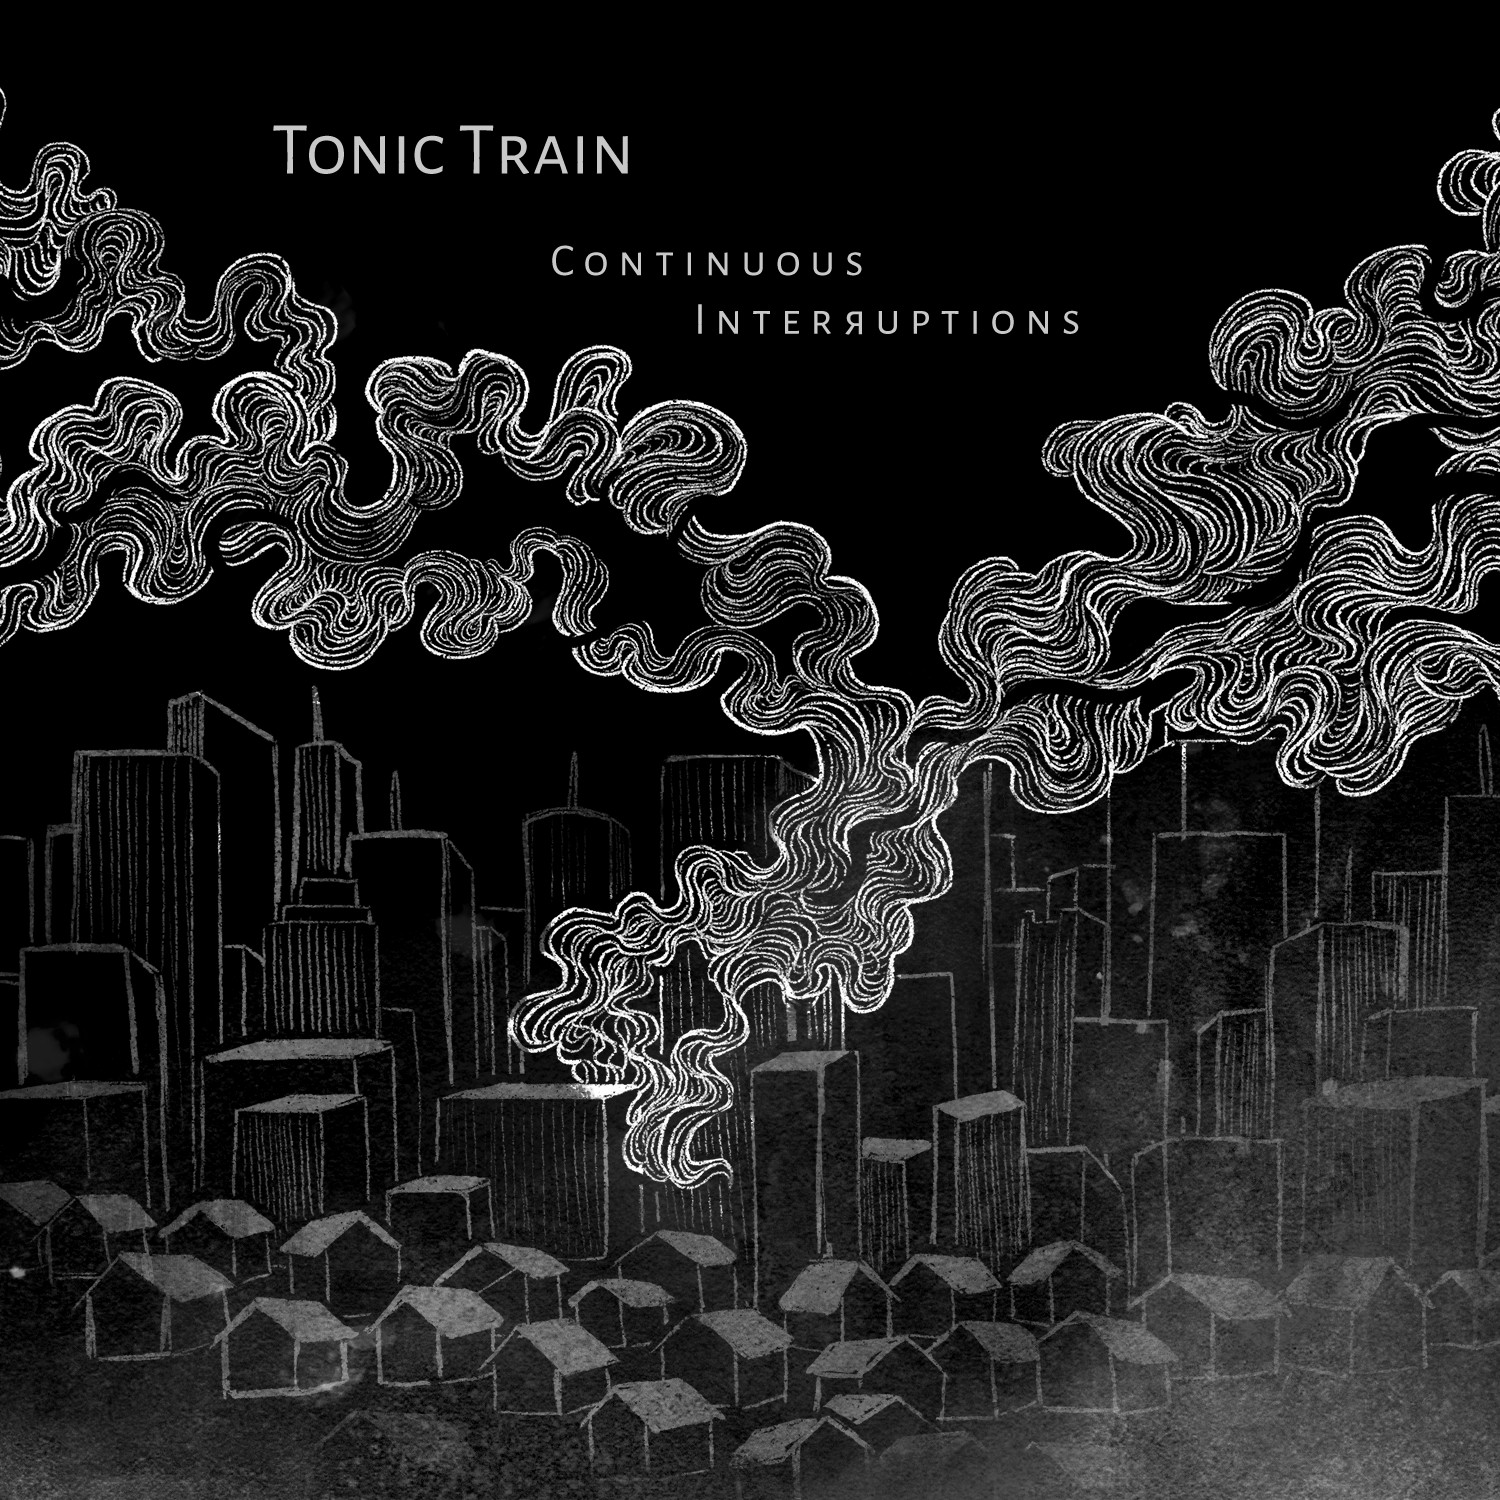 Tonic Train CD out on Antenna Non Grata